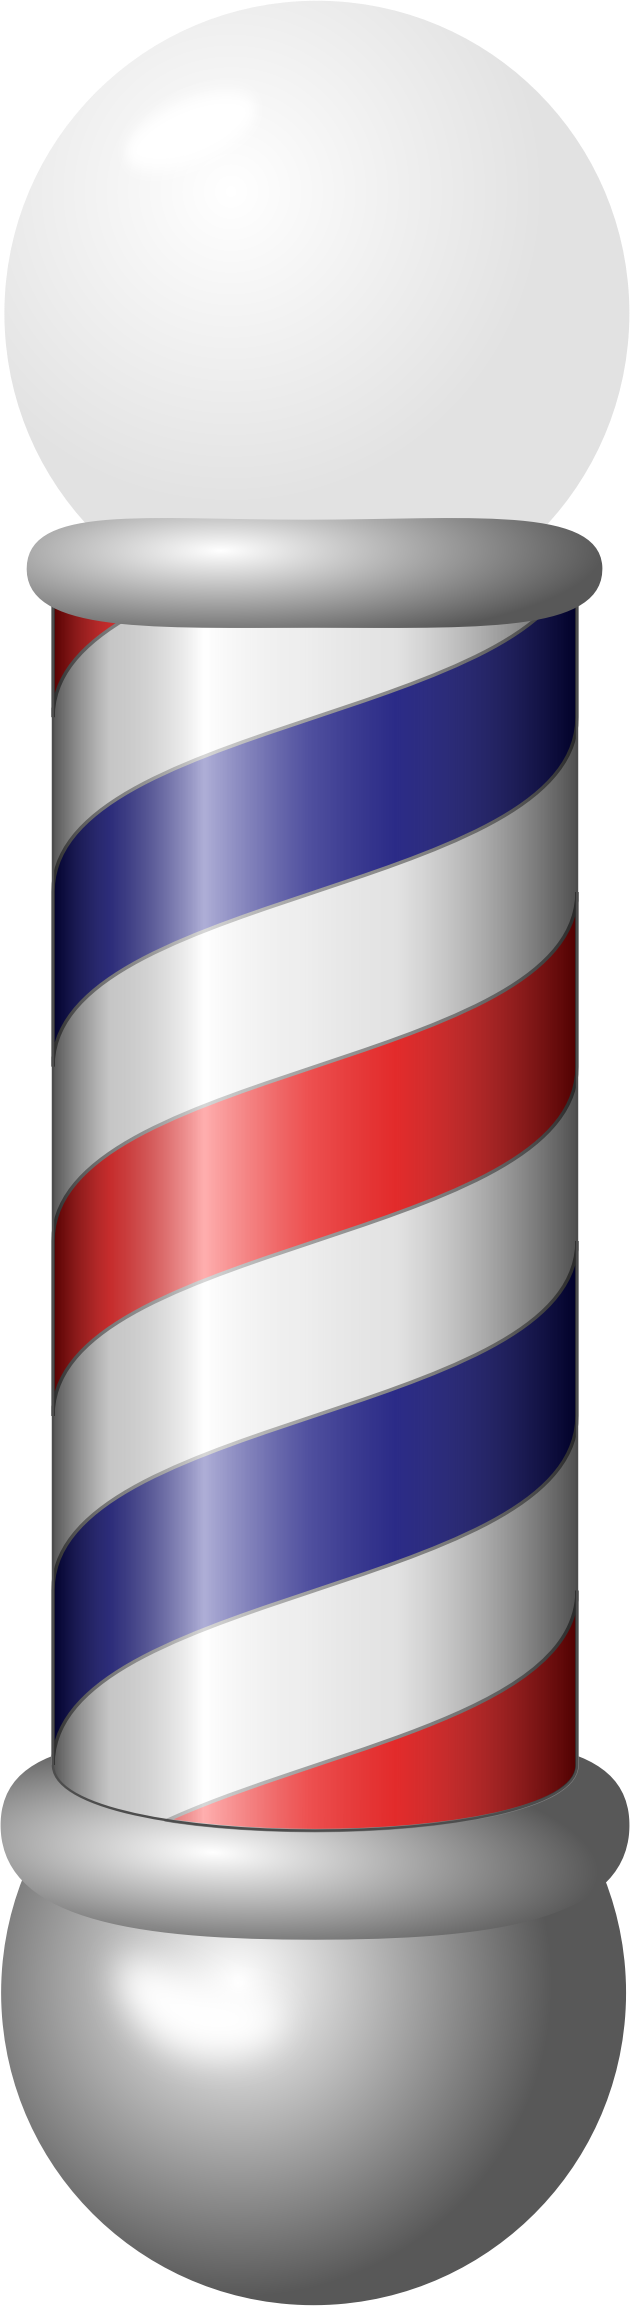 Clipart - barber pole